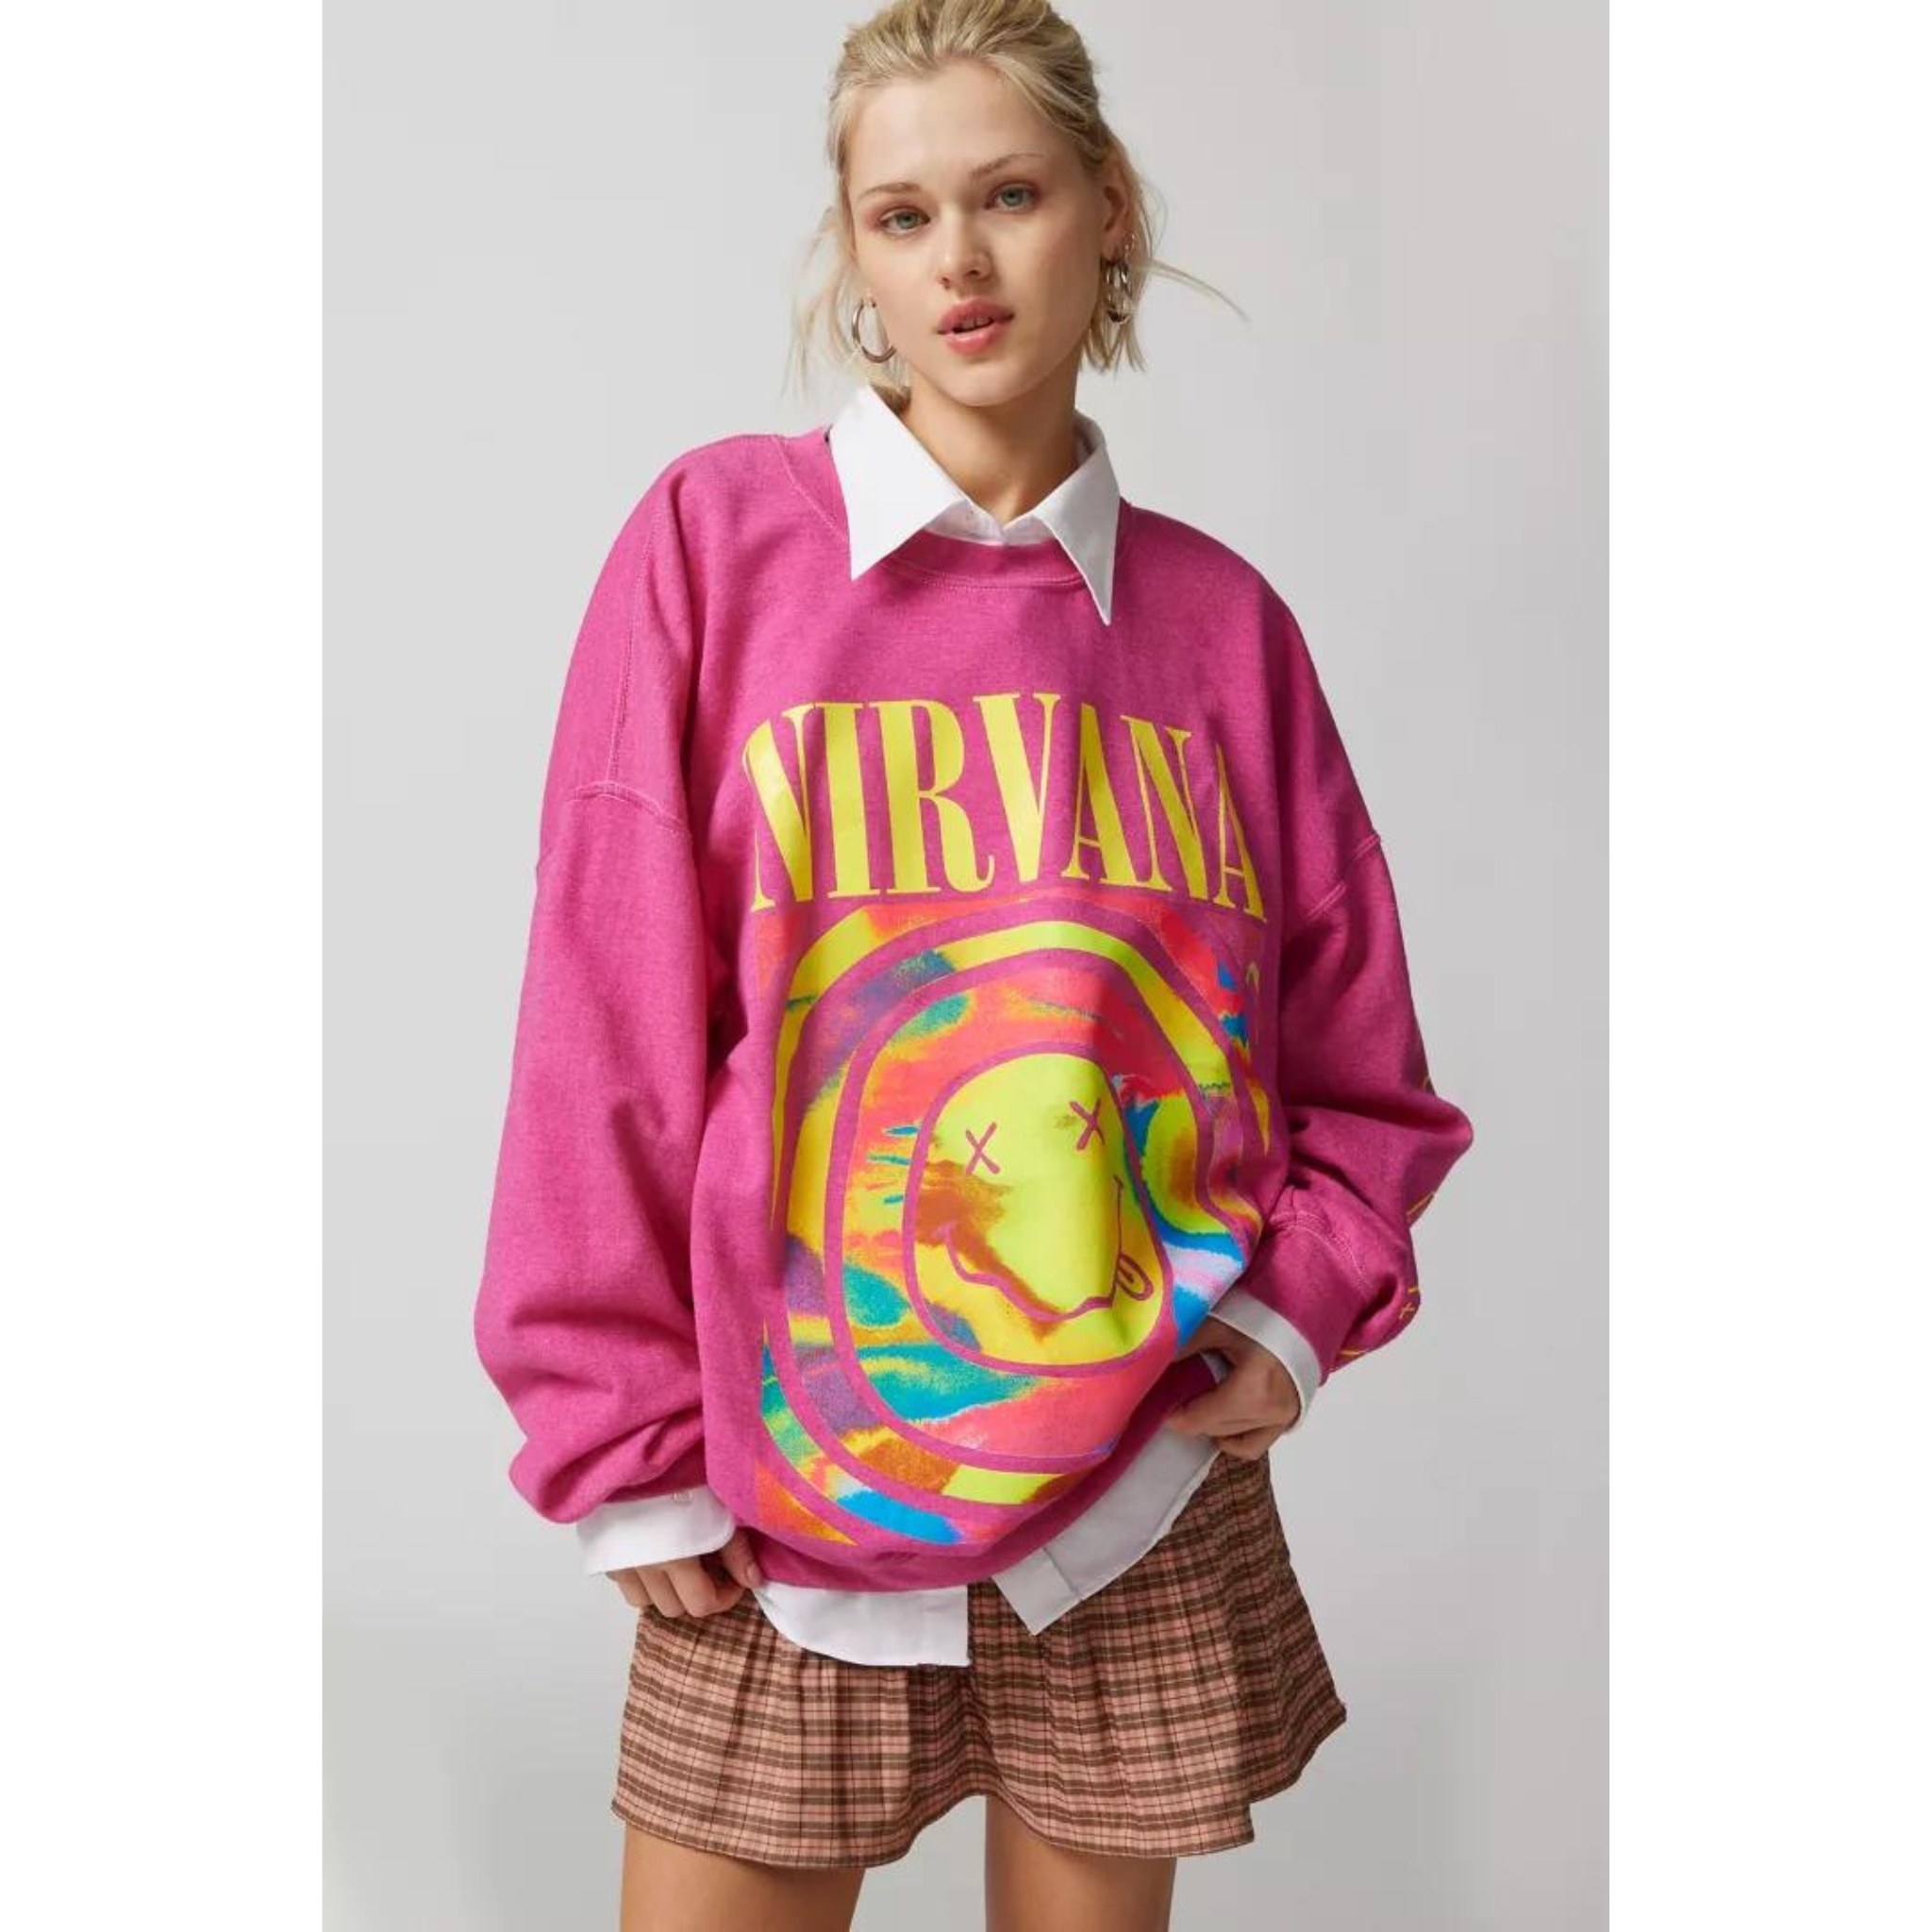 Nirvana Smile Overdyed Crew Neck Sweatshirt (3 COLORS)